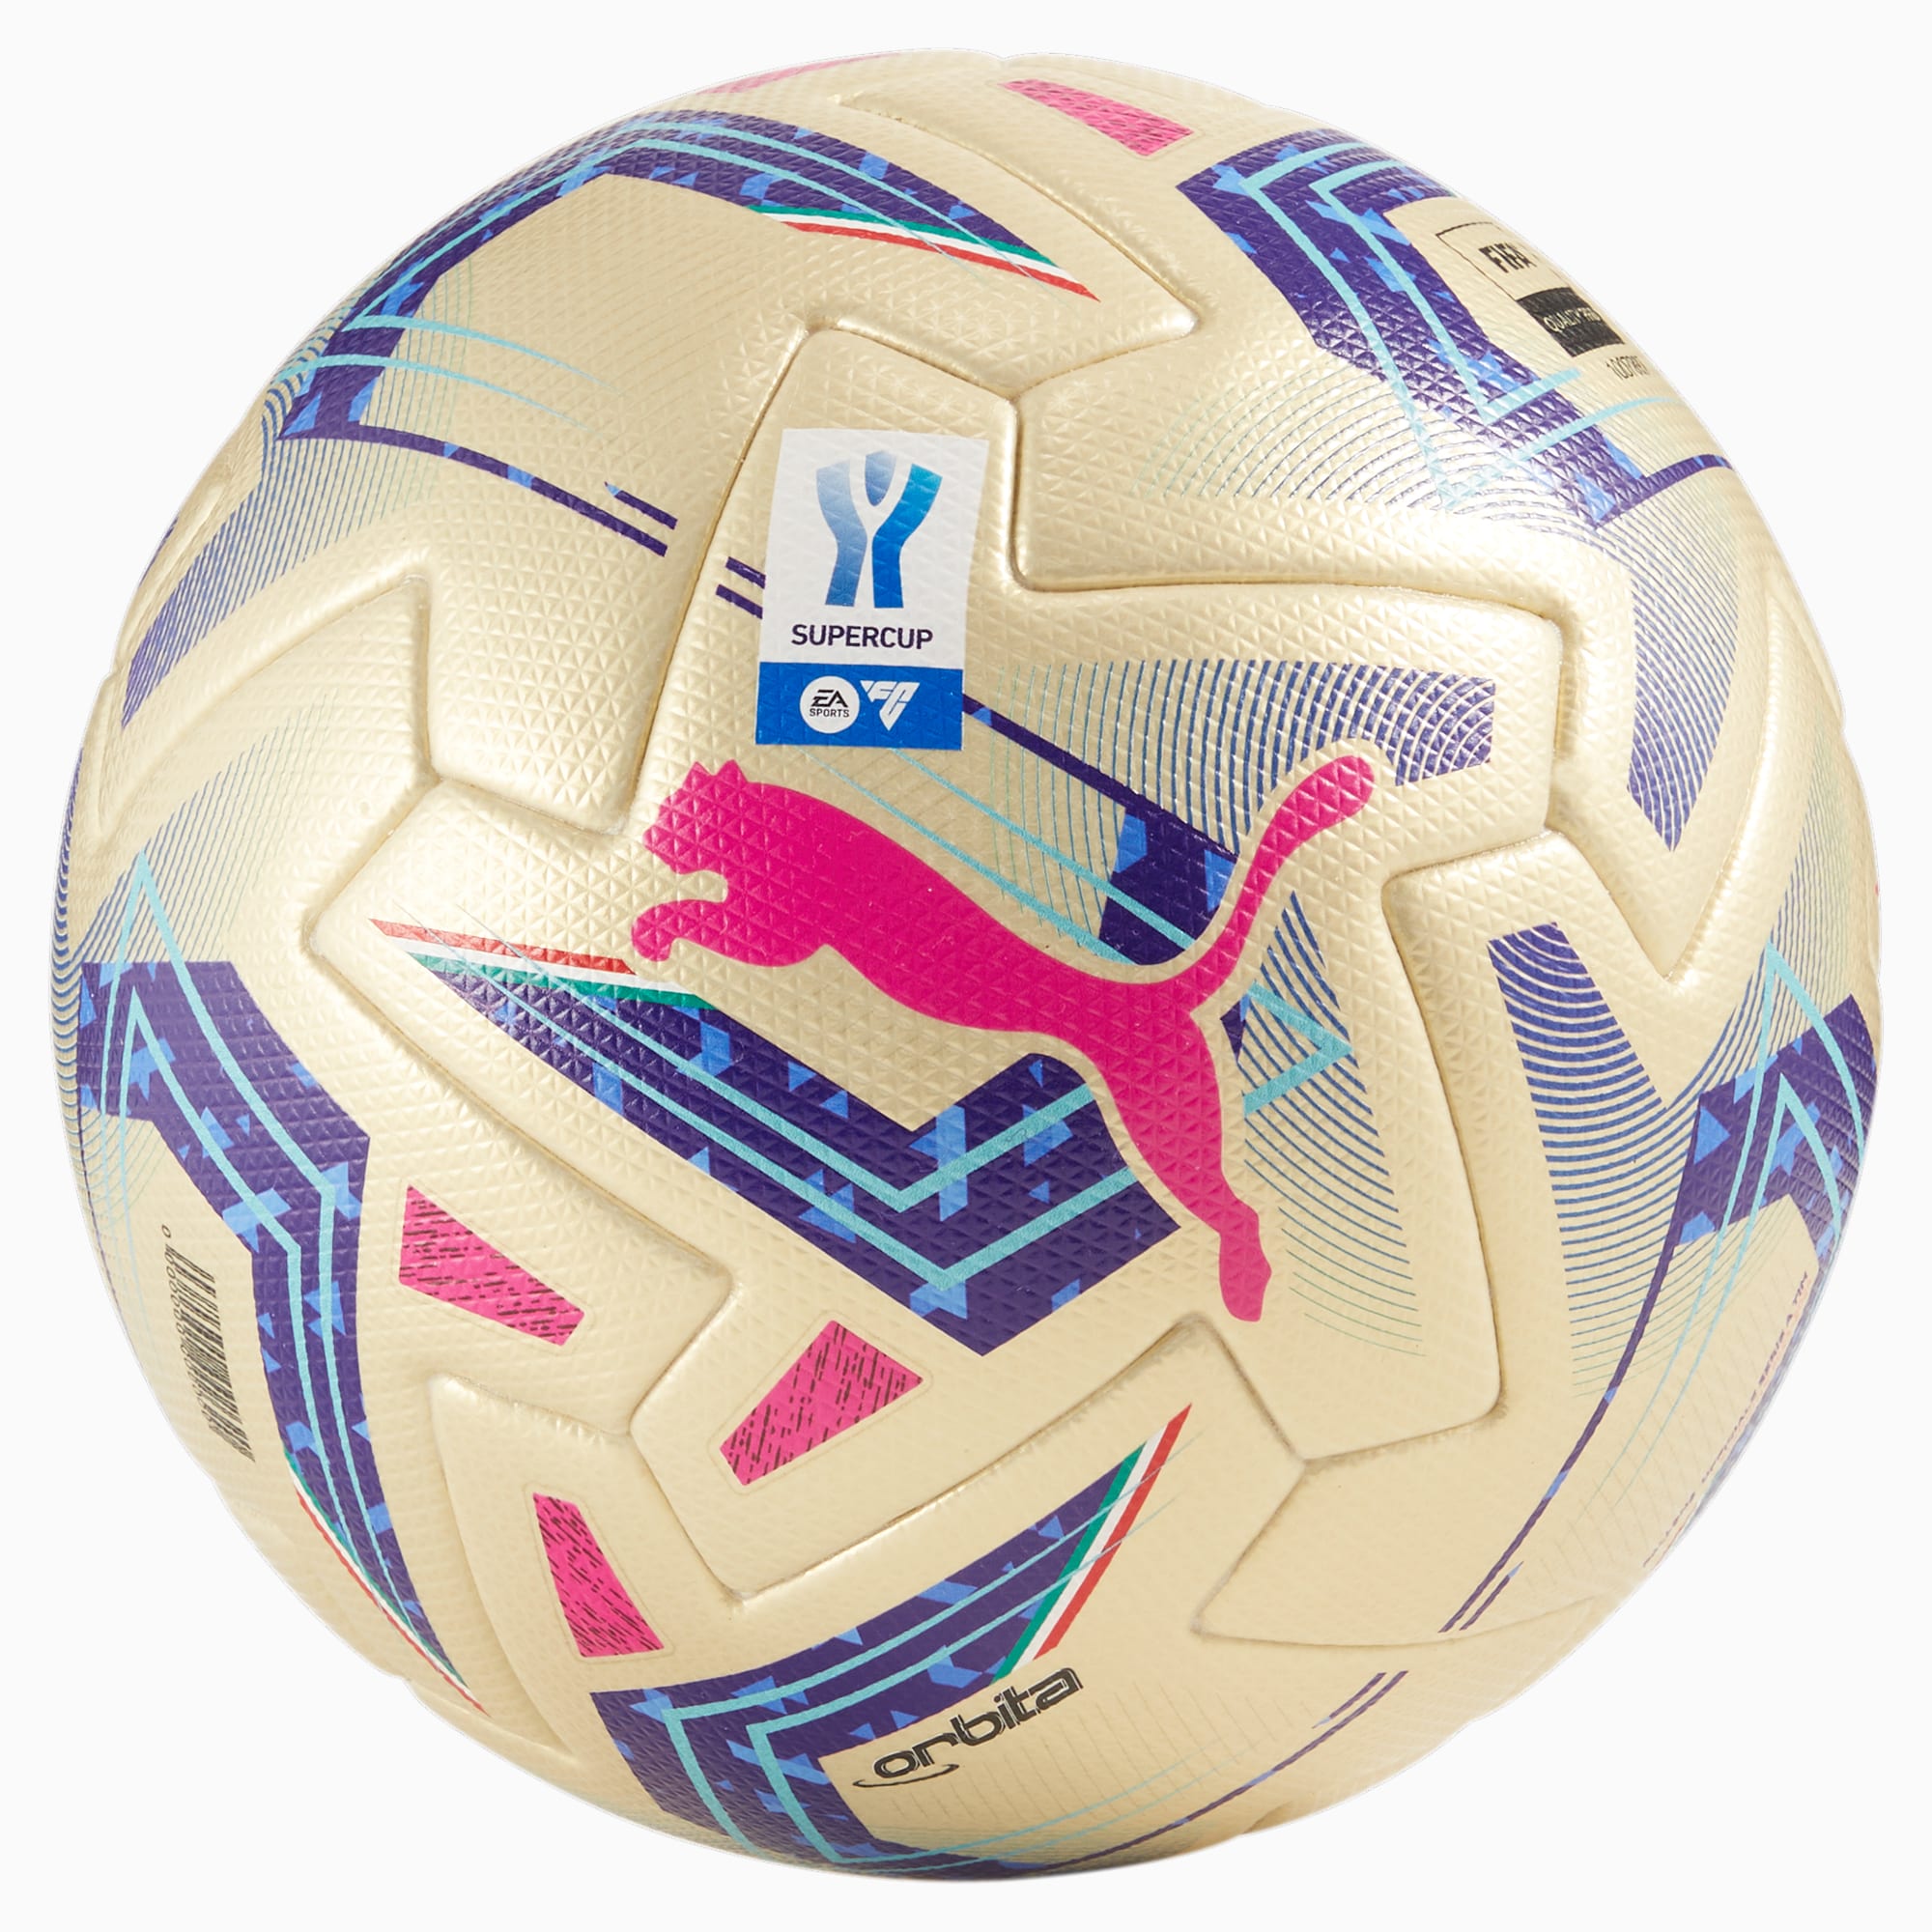 PUMA Serie A Special Edition FIFA Quality Pro Fußball, Gold/Blau, Größe: 5